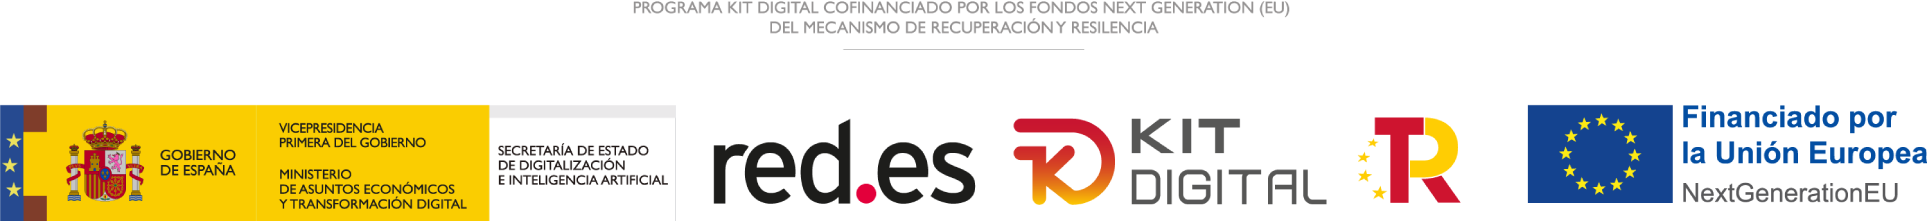 Logo digitalización